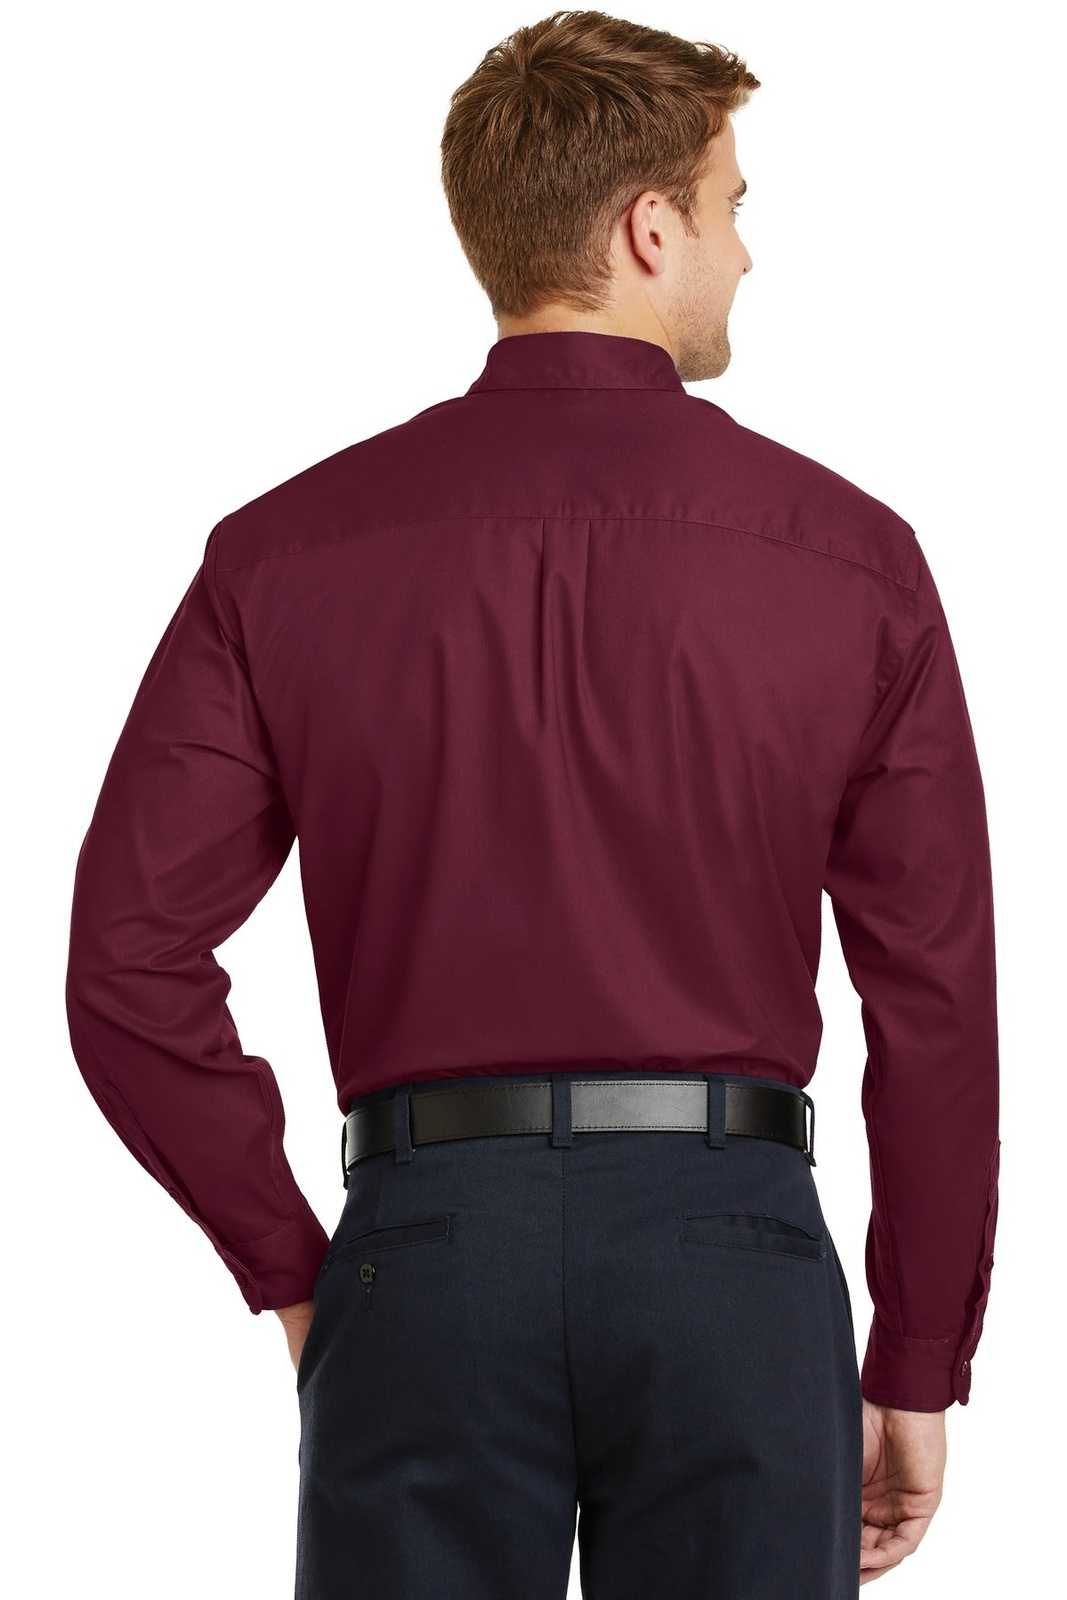 CornerStone SP17 Long Sleeve Superpro Twill Shirt - Burgundy - HIT a Double - 1